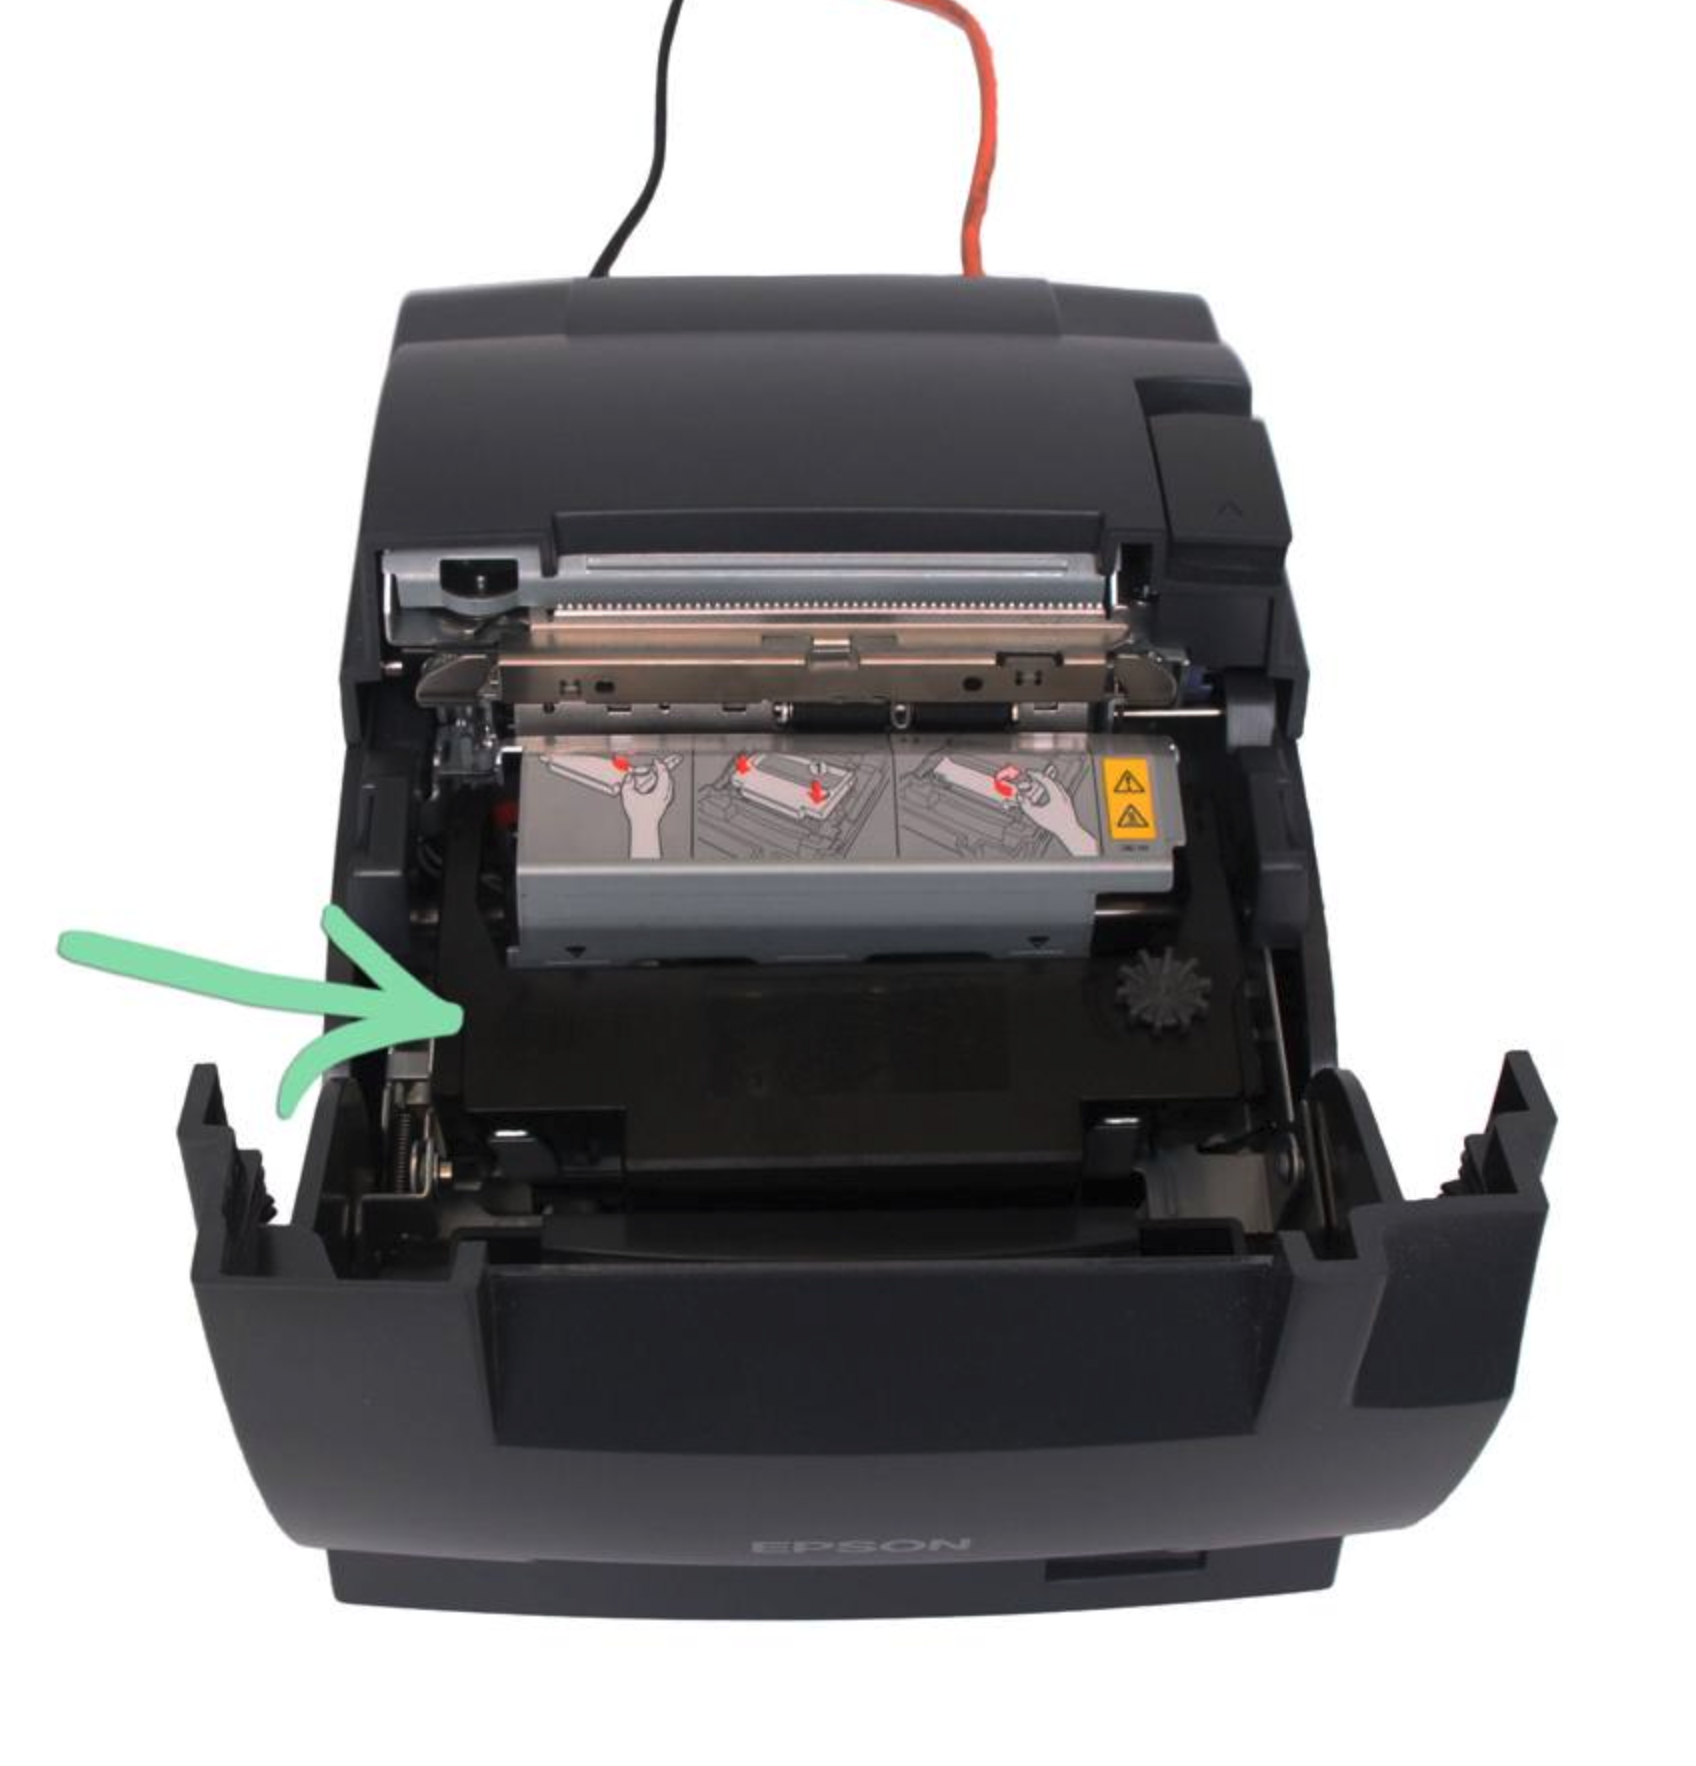 Epson TM-U220D Receipt/Kitchen LAN Printer 